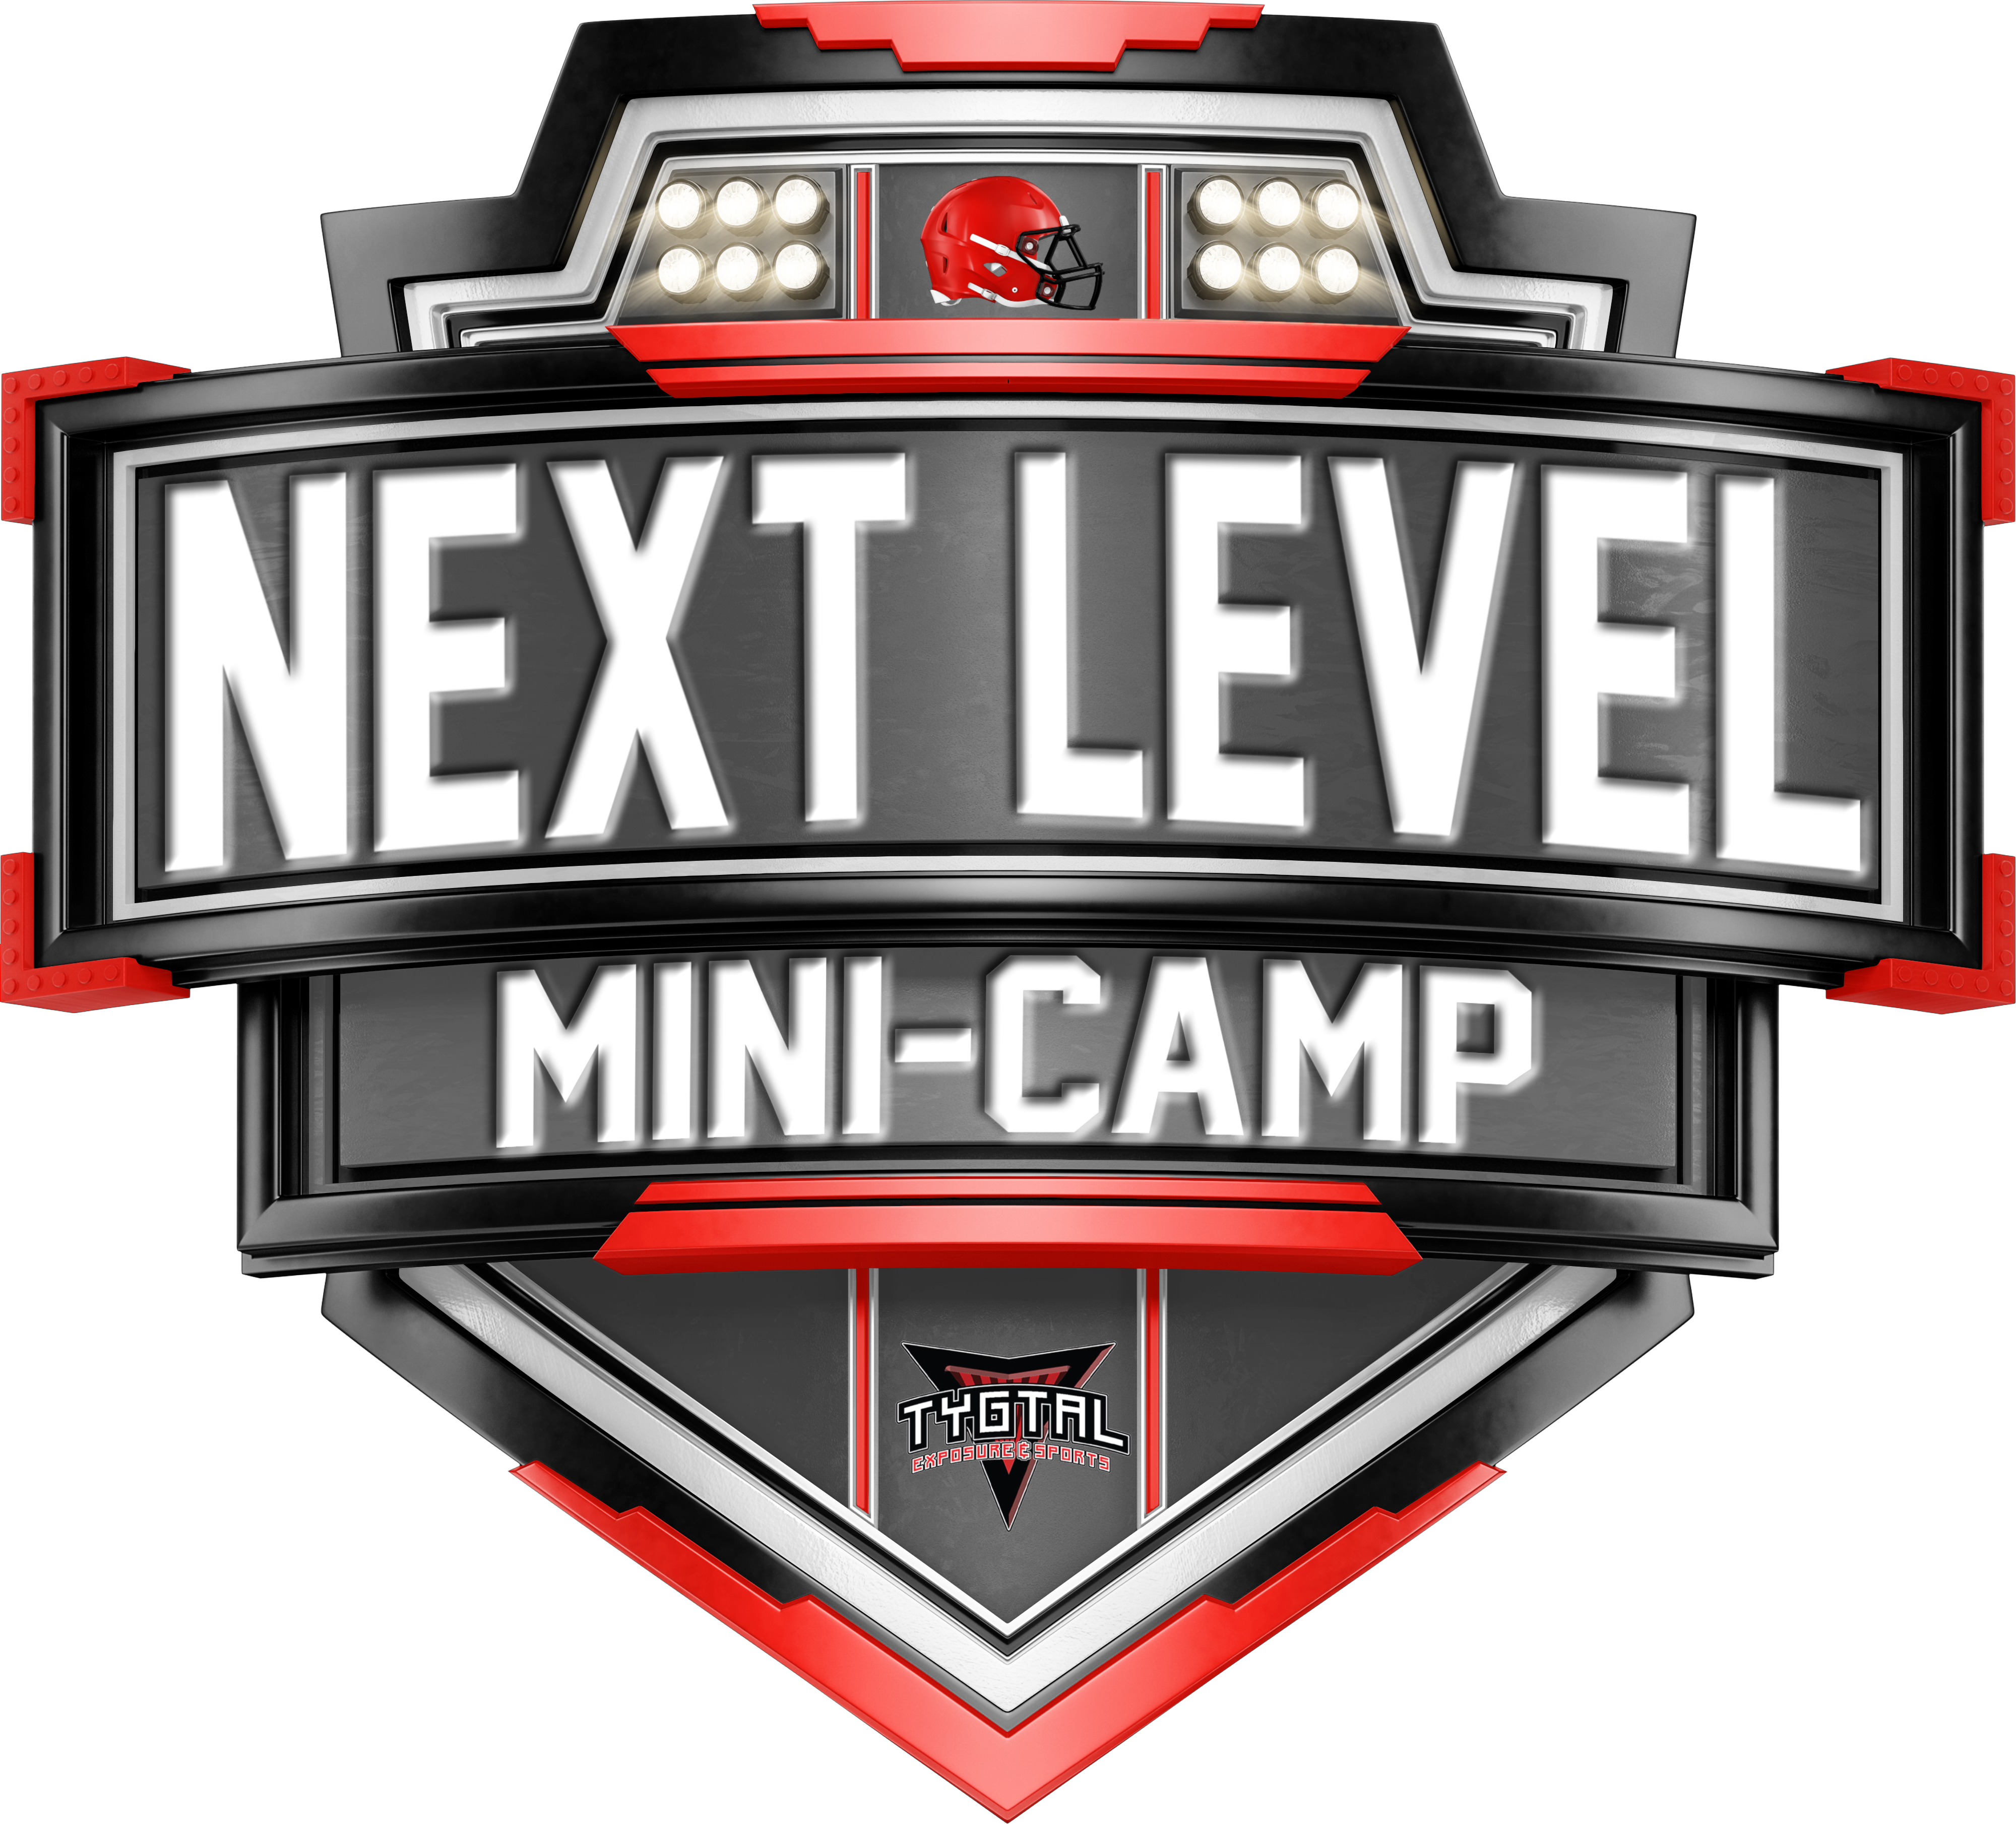 NEXT LEVEL Mini-Camp logo